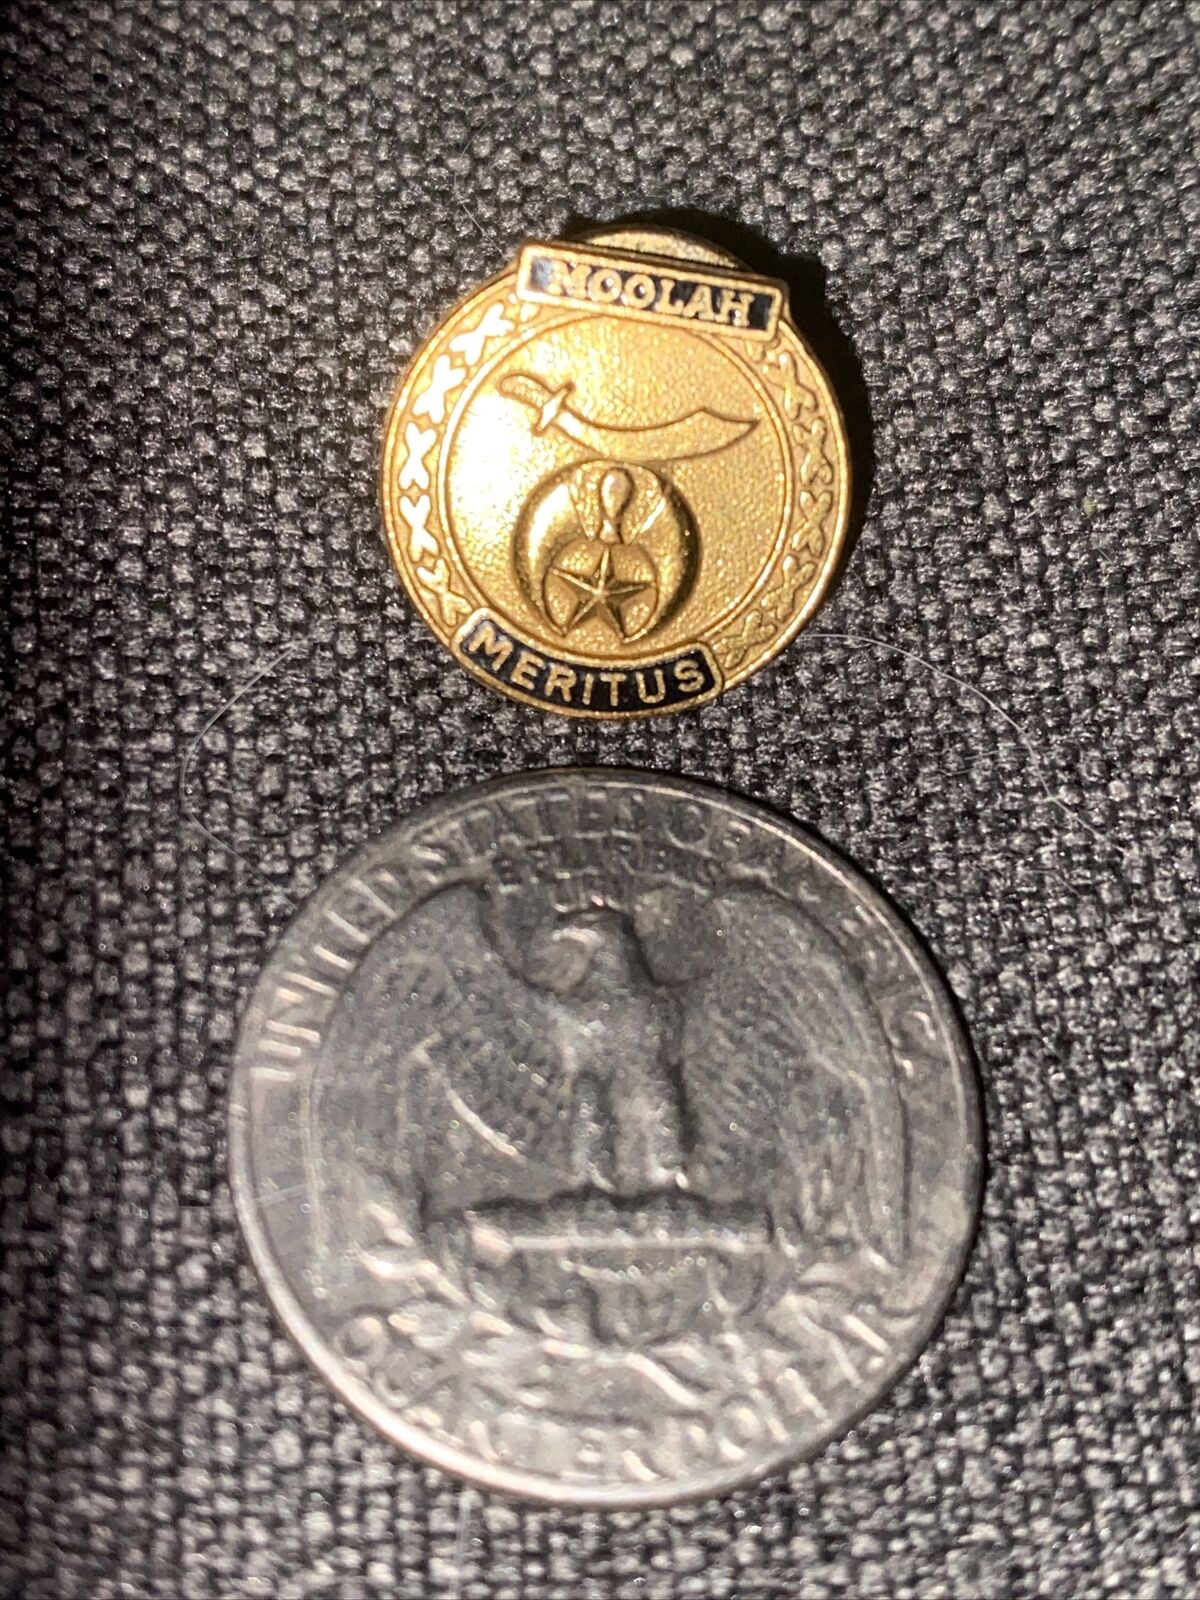 Free Mason - Masonic Shriners Moolah Meritus Pin - Ultra Rare Vintage